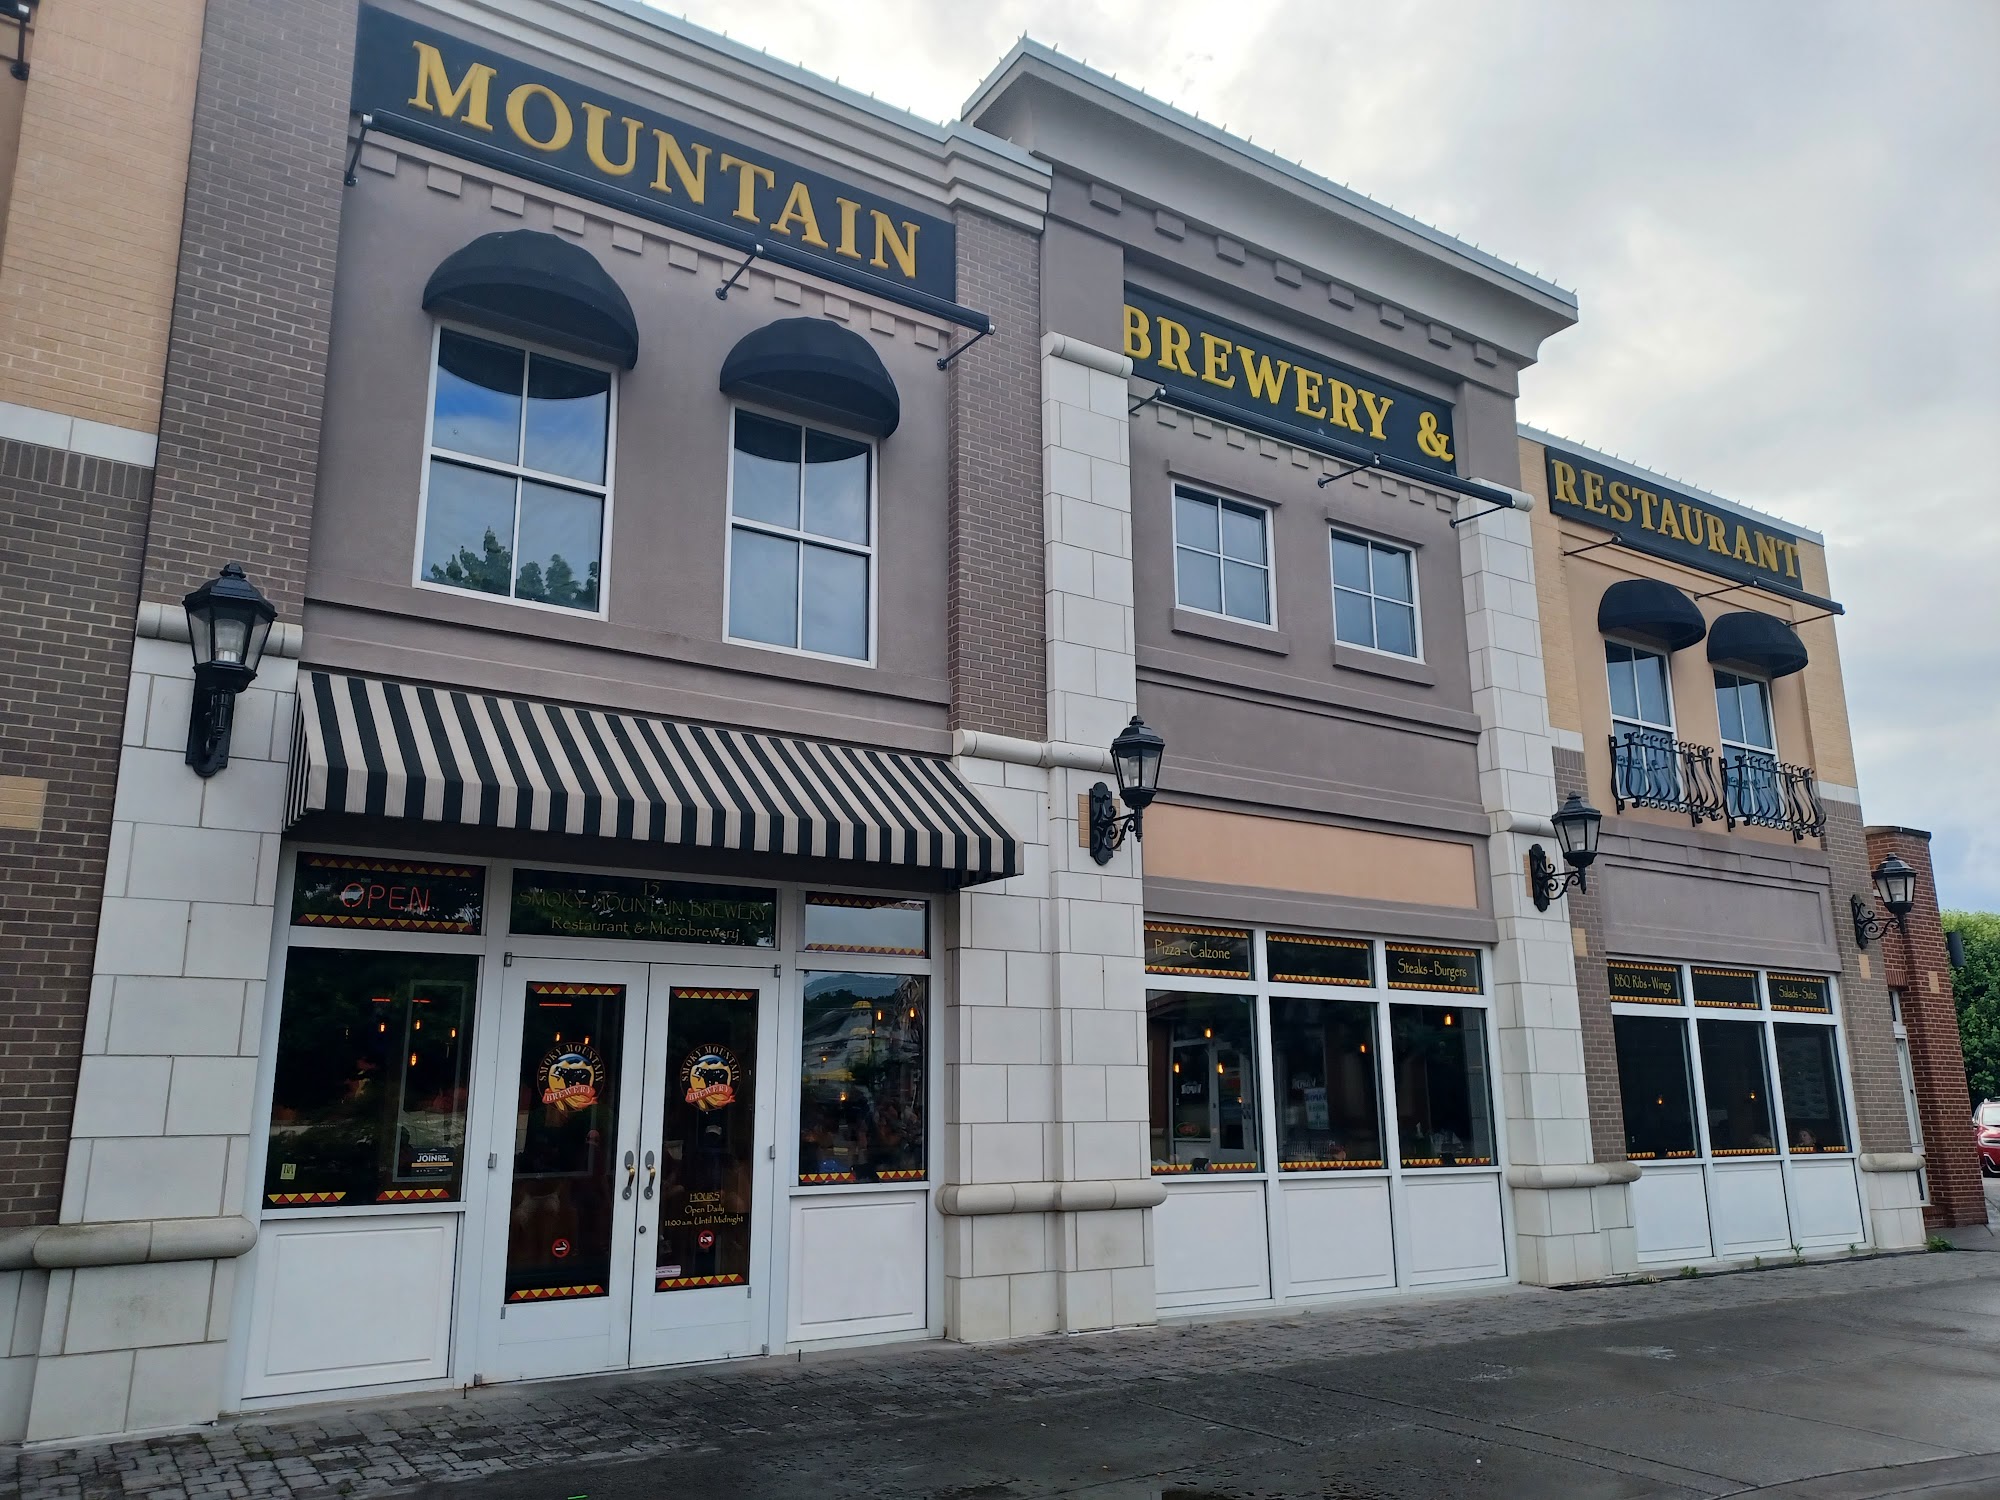 Smoky Mountain Brewery